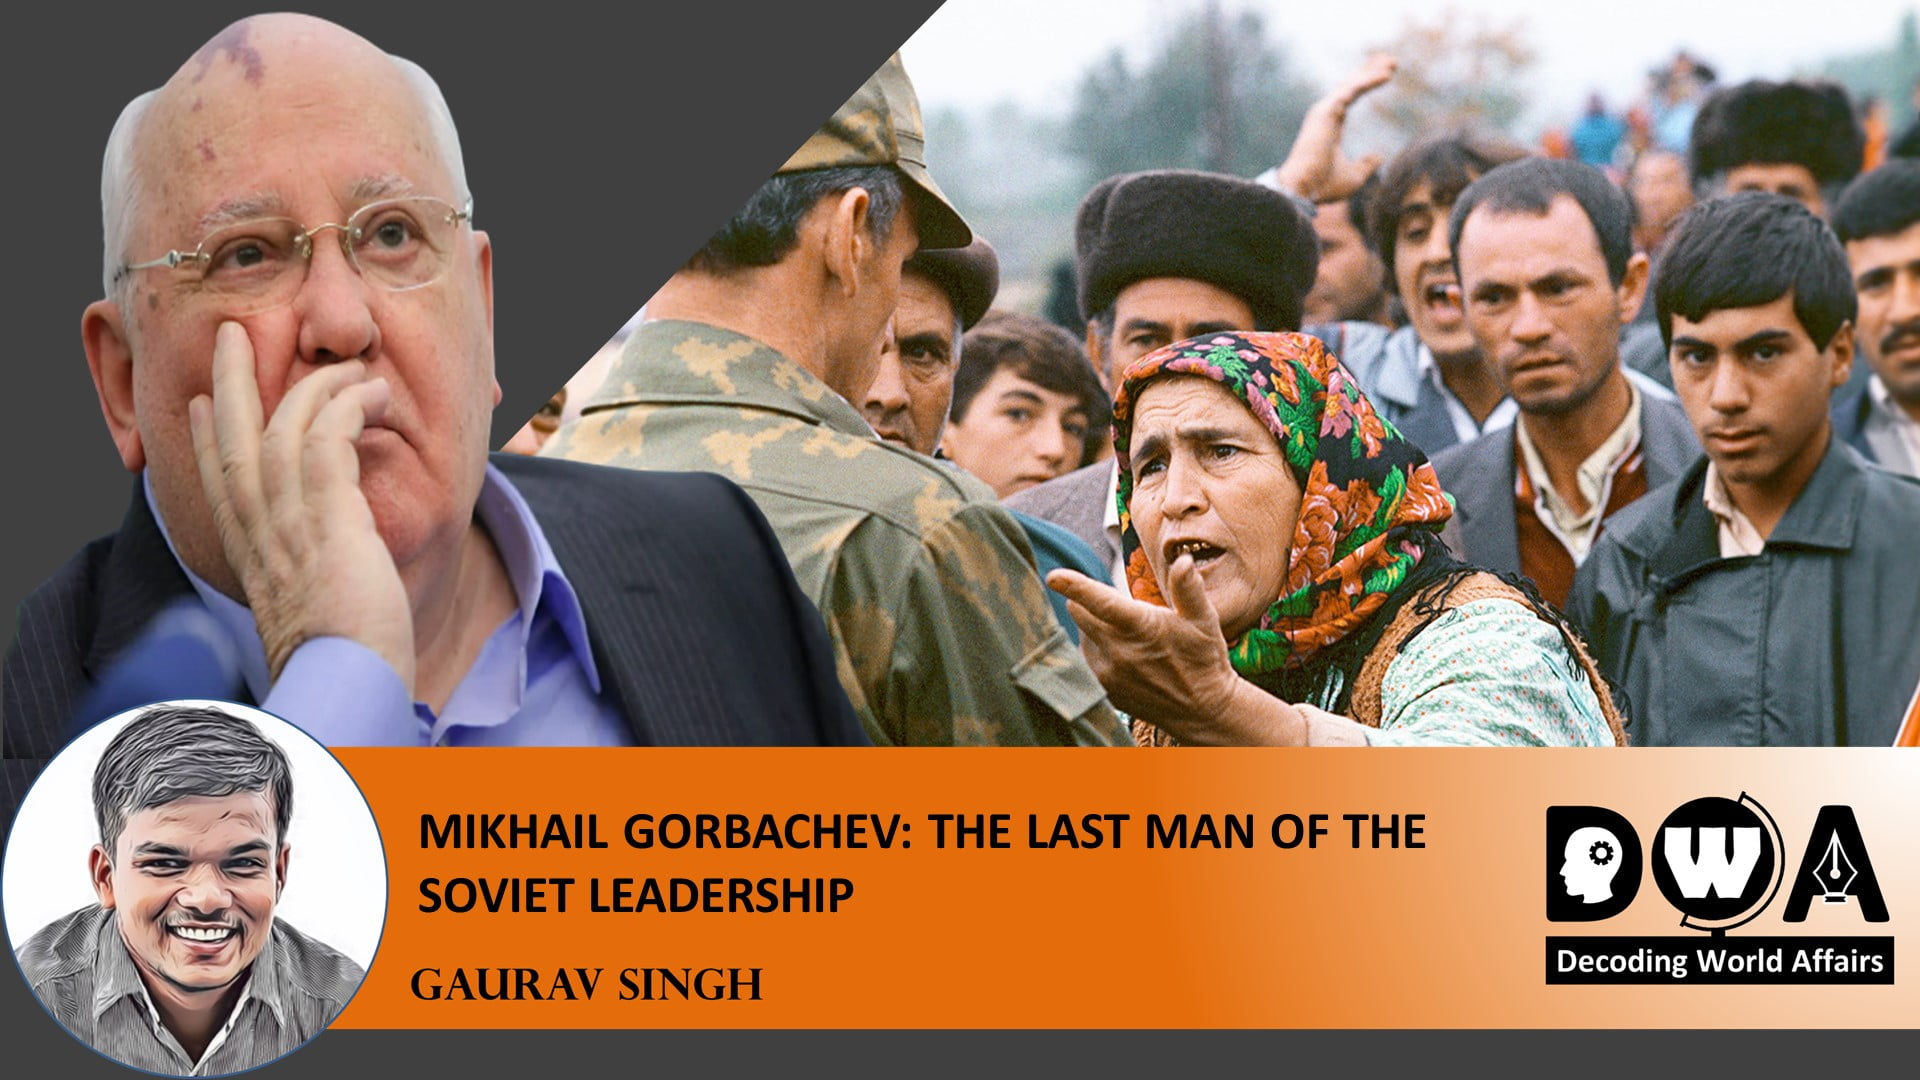 Mikhail Gorbachev: The last man of the Soviet leadership